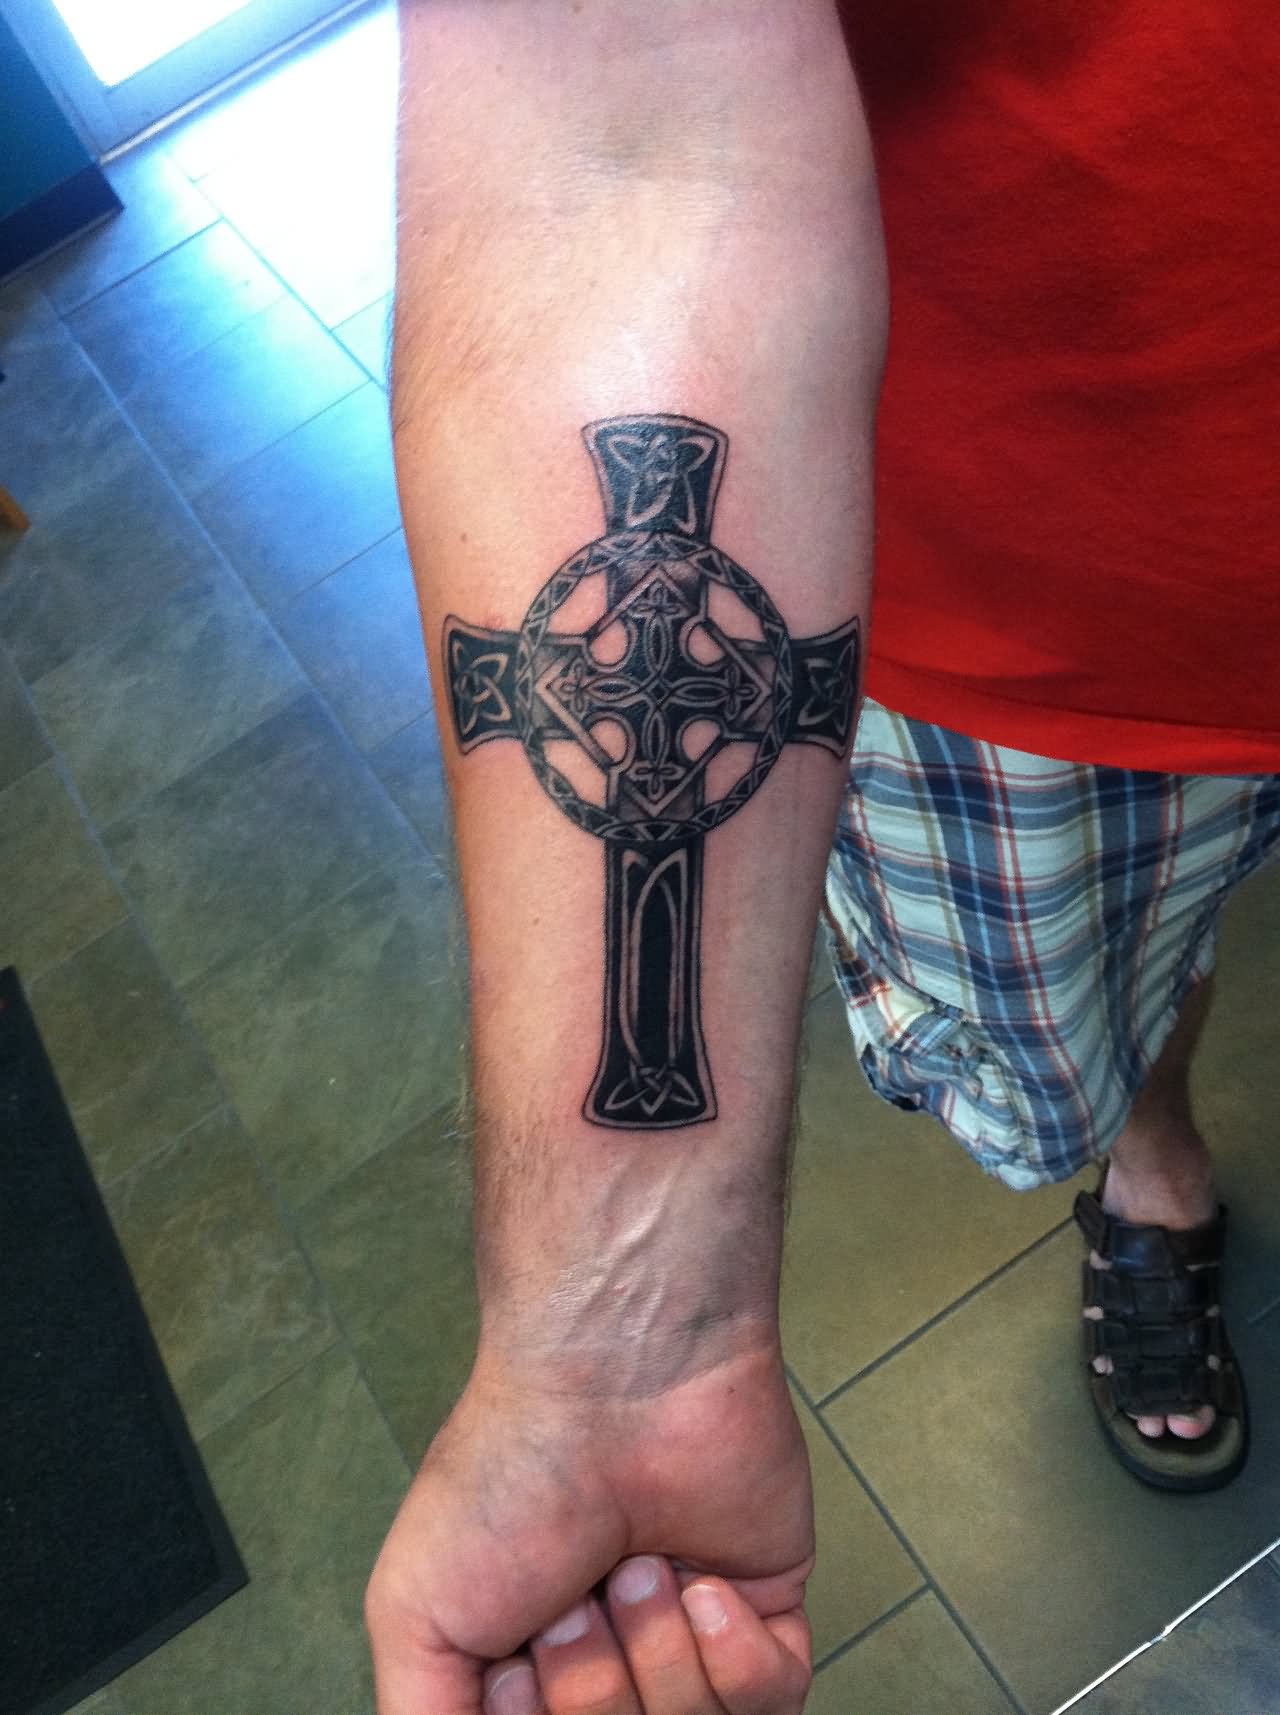 Awesome Celtic Cross Tattoo on Forearm